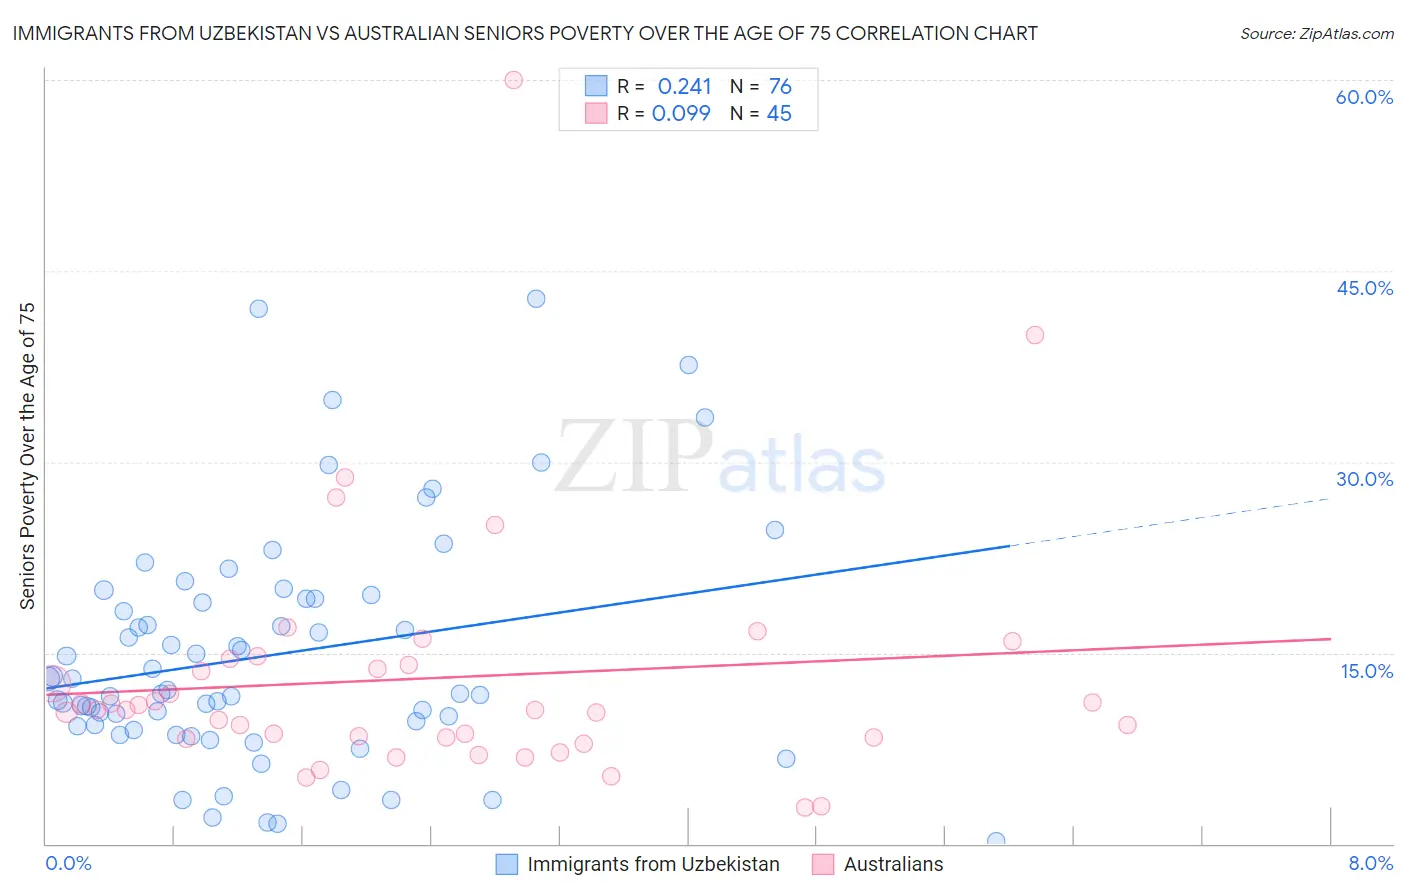 Immigrants from Uzbekistan vs Australian Seniors Poverty Over the Age of 75